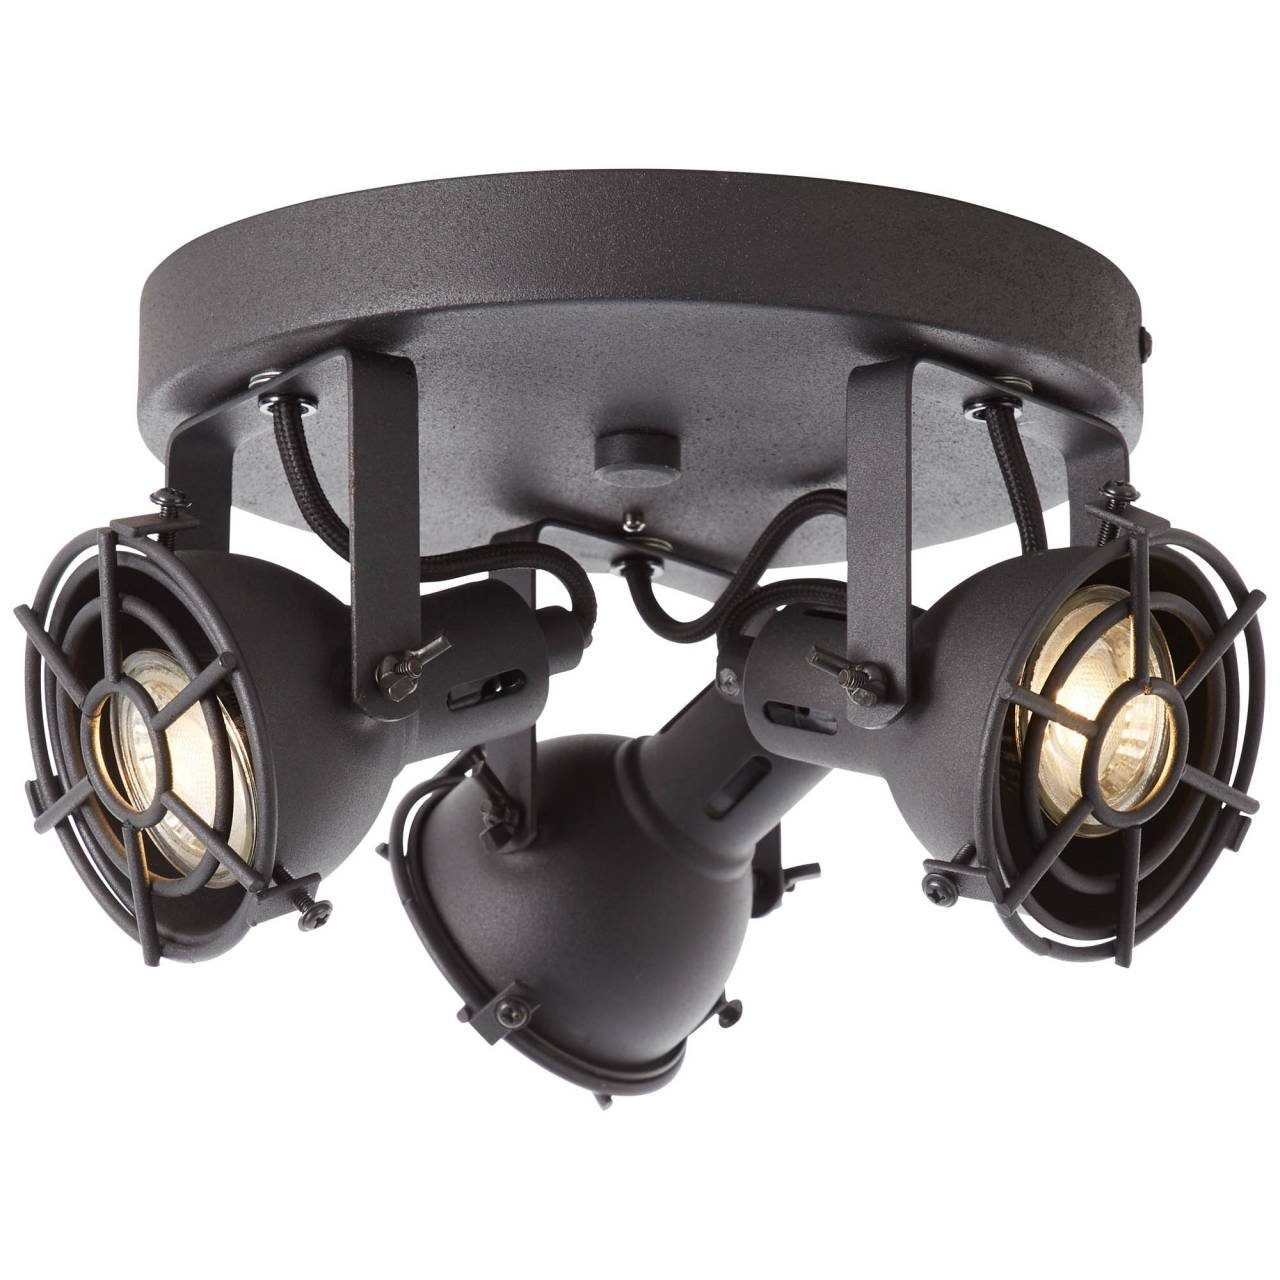 3x Lampe Deckenleuchte Brilliant LED-PAR51, Jesper, korund Jesper schwarz 3flg LED 3000K, GU10 Spotrondell